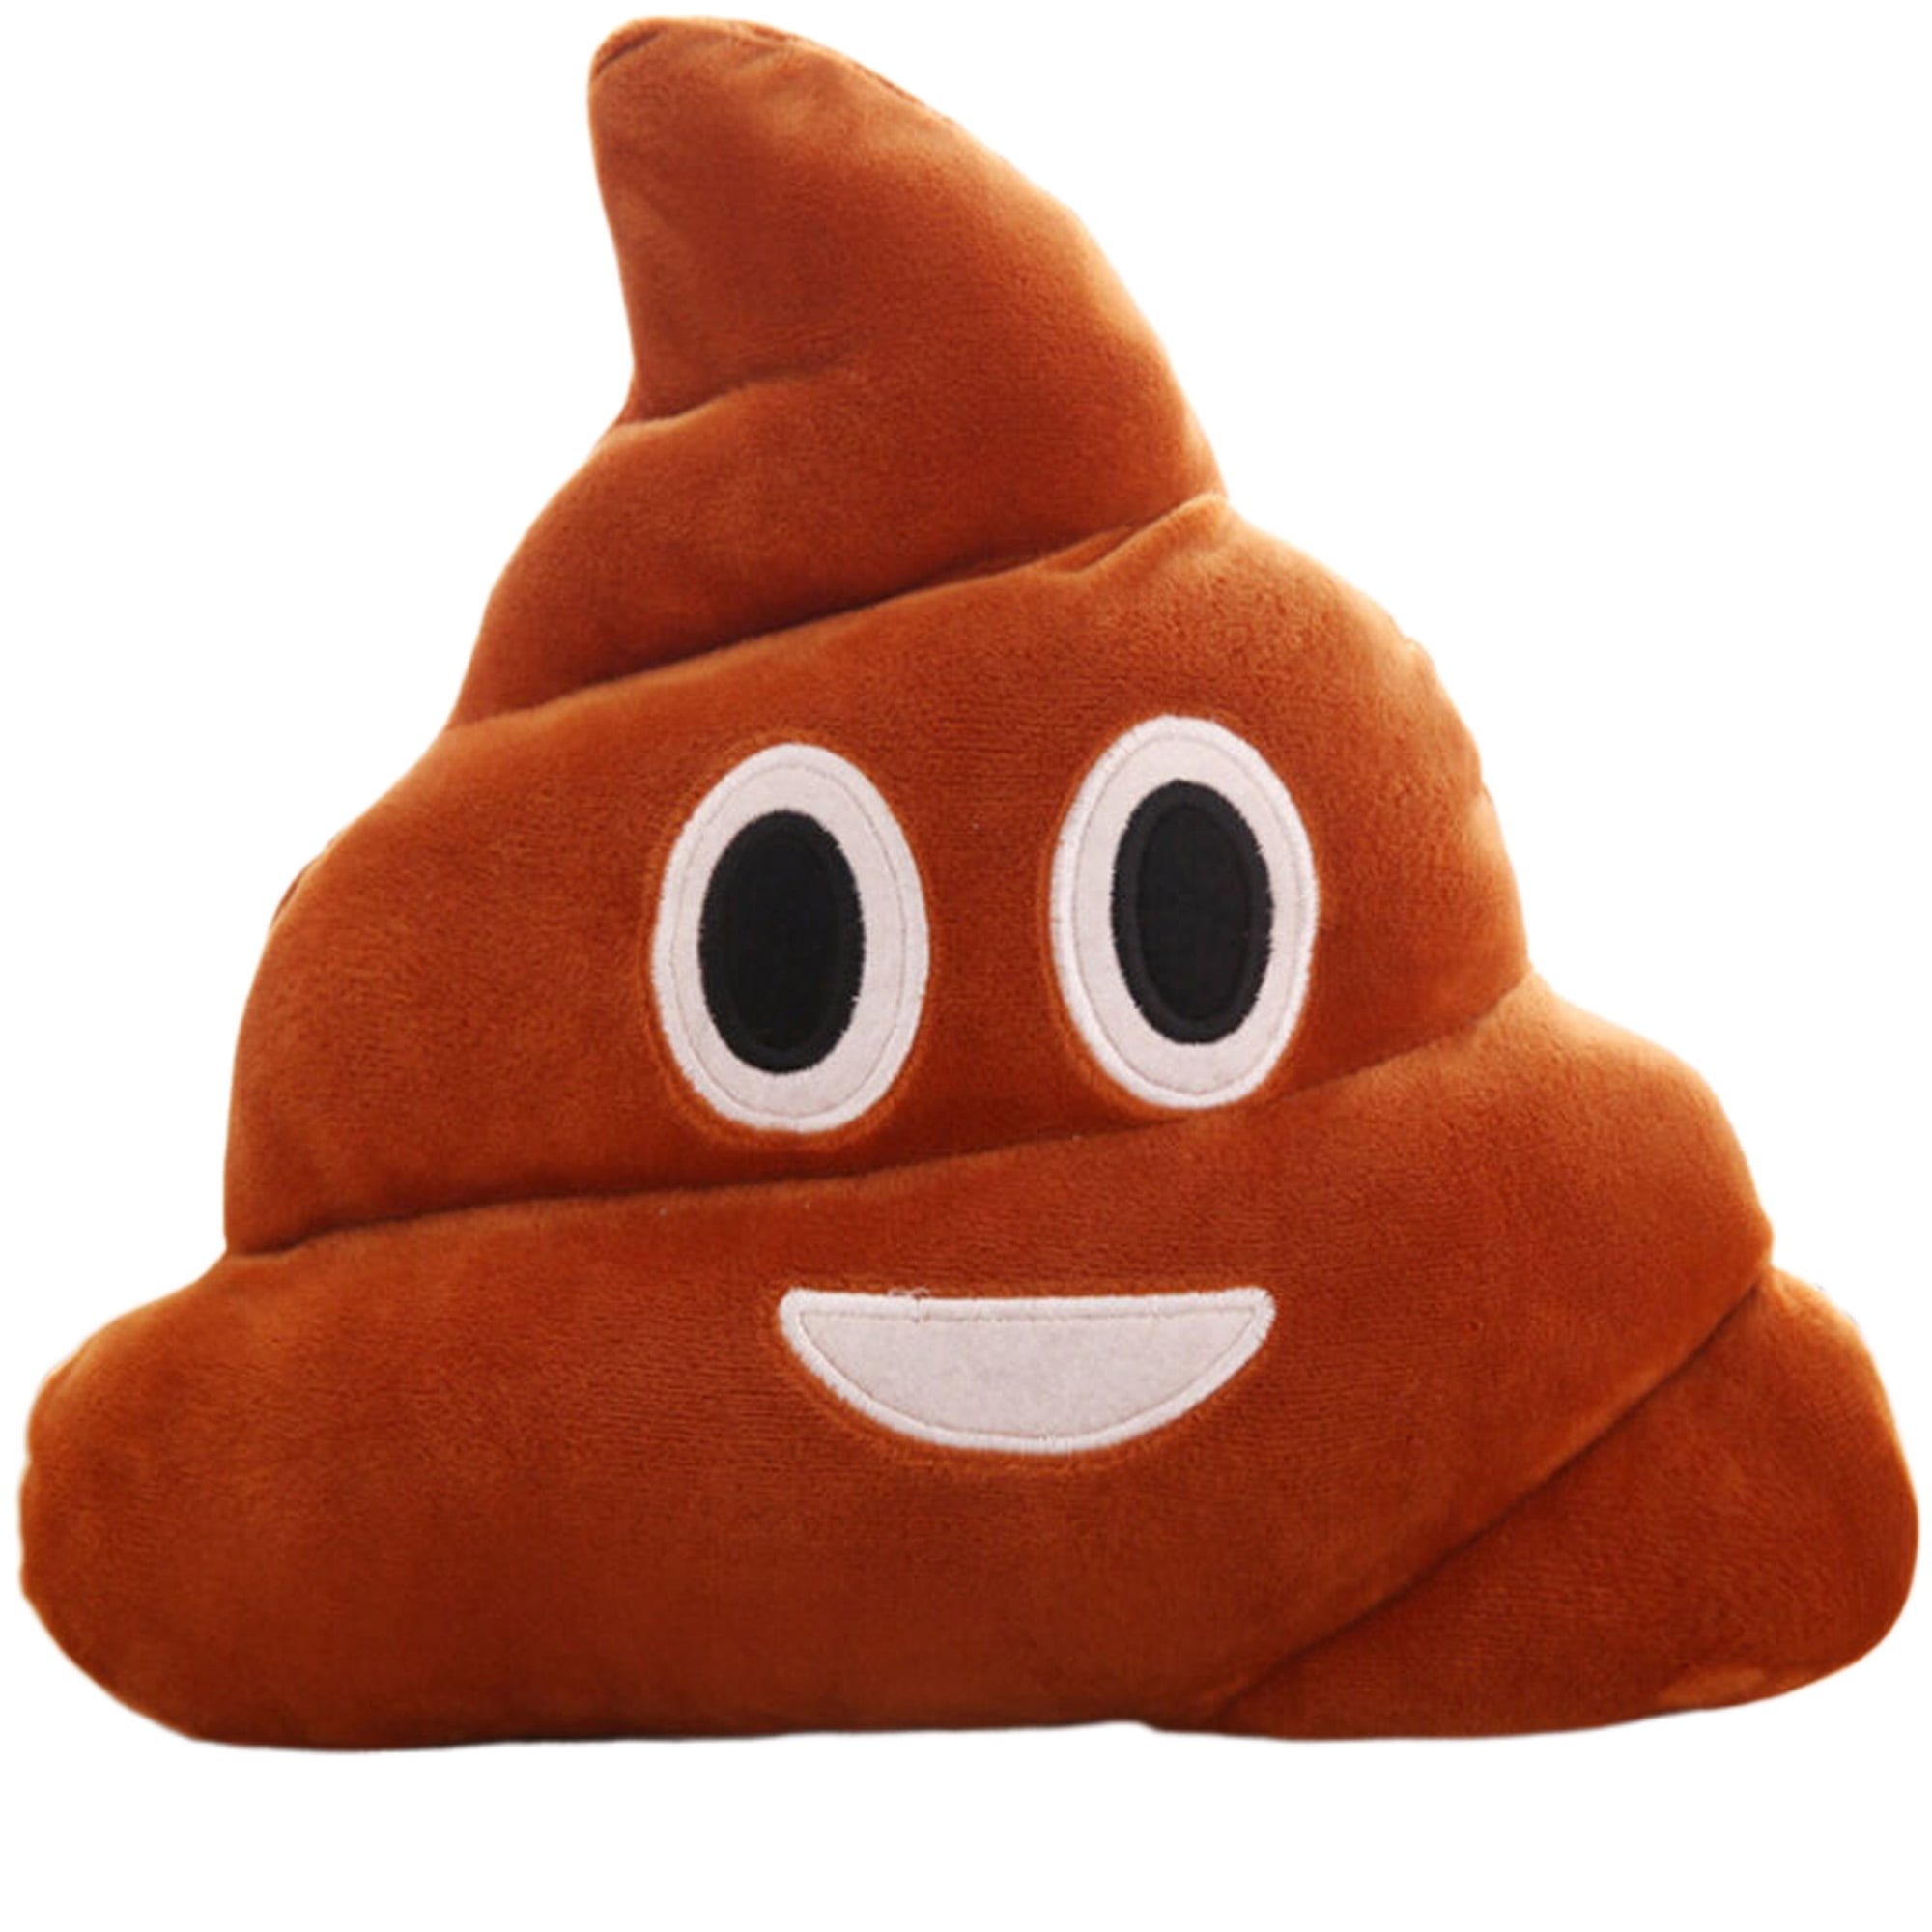 Emoji Emoticon Poo Poop Cushion Pillows Soft Plush Toys Stuffed Doll Funny Gifts 